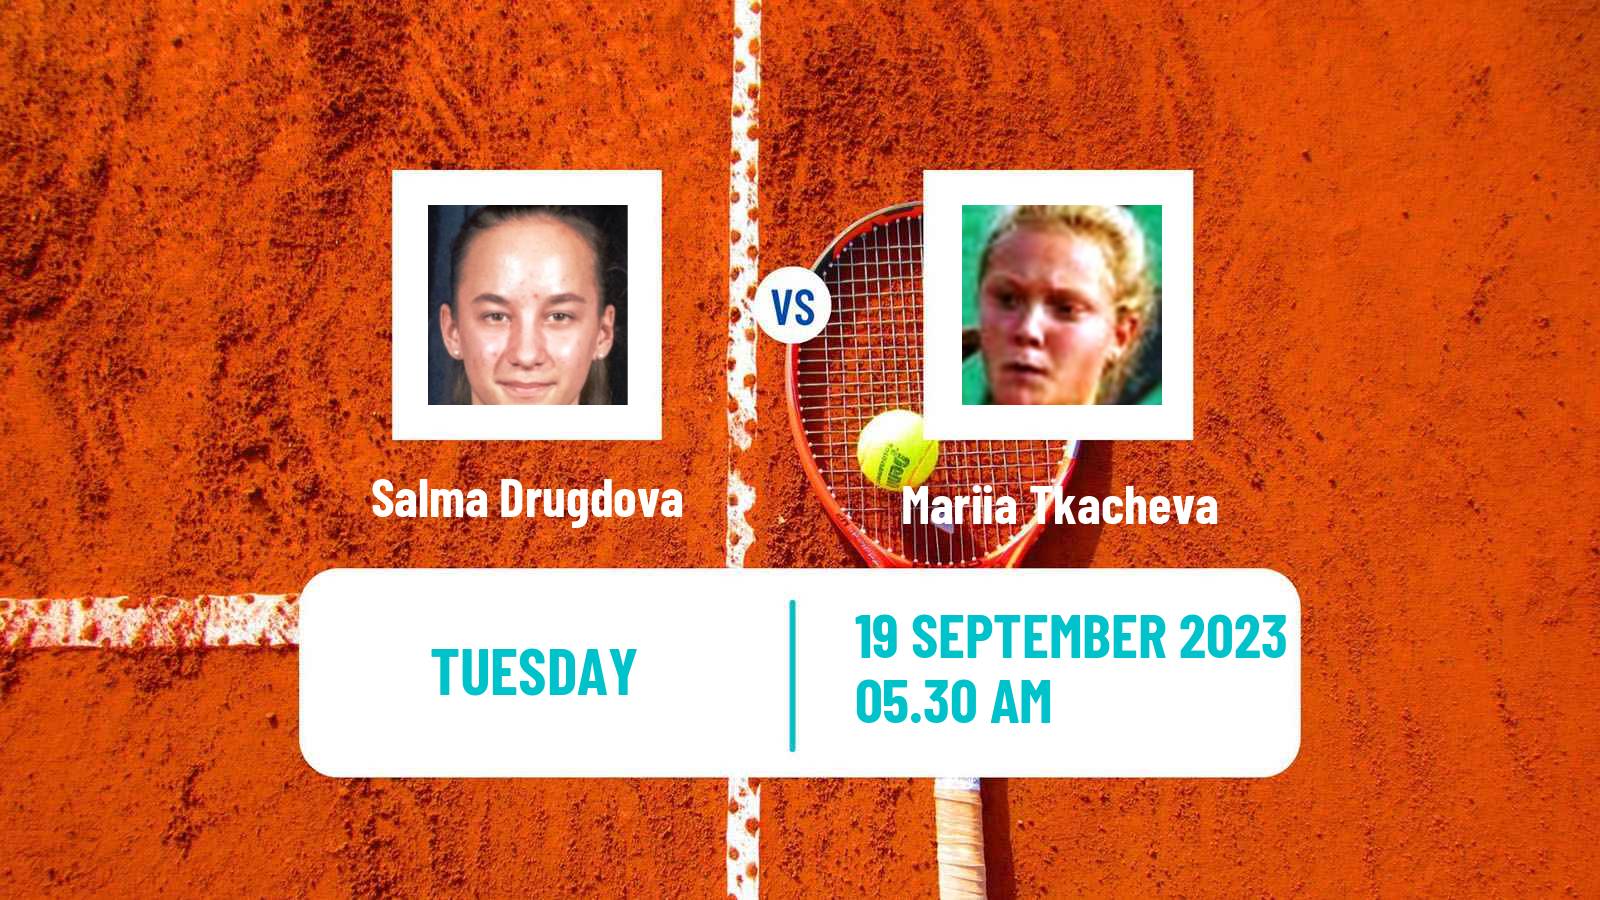 Tennis ITF W15 Kursumlijska Banja 11 Women Salma Drugdova - Mariia Tkacheva